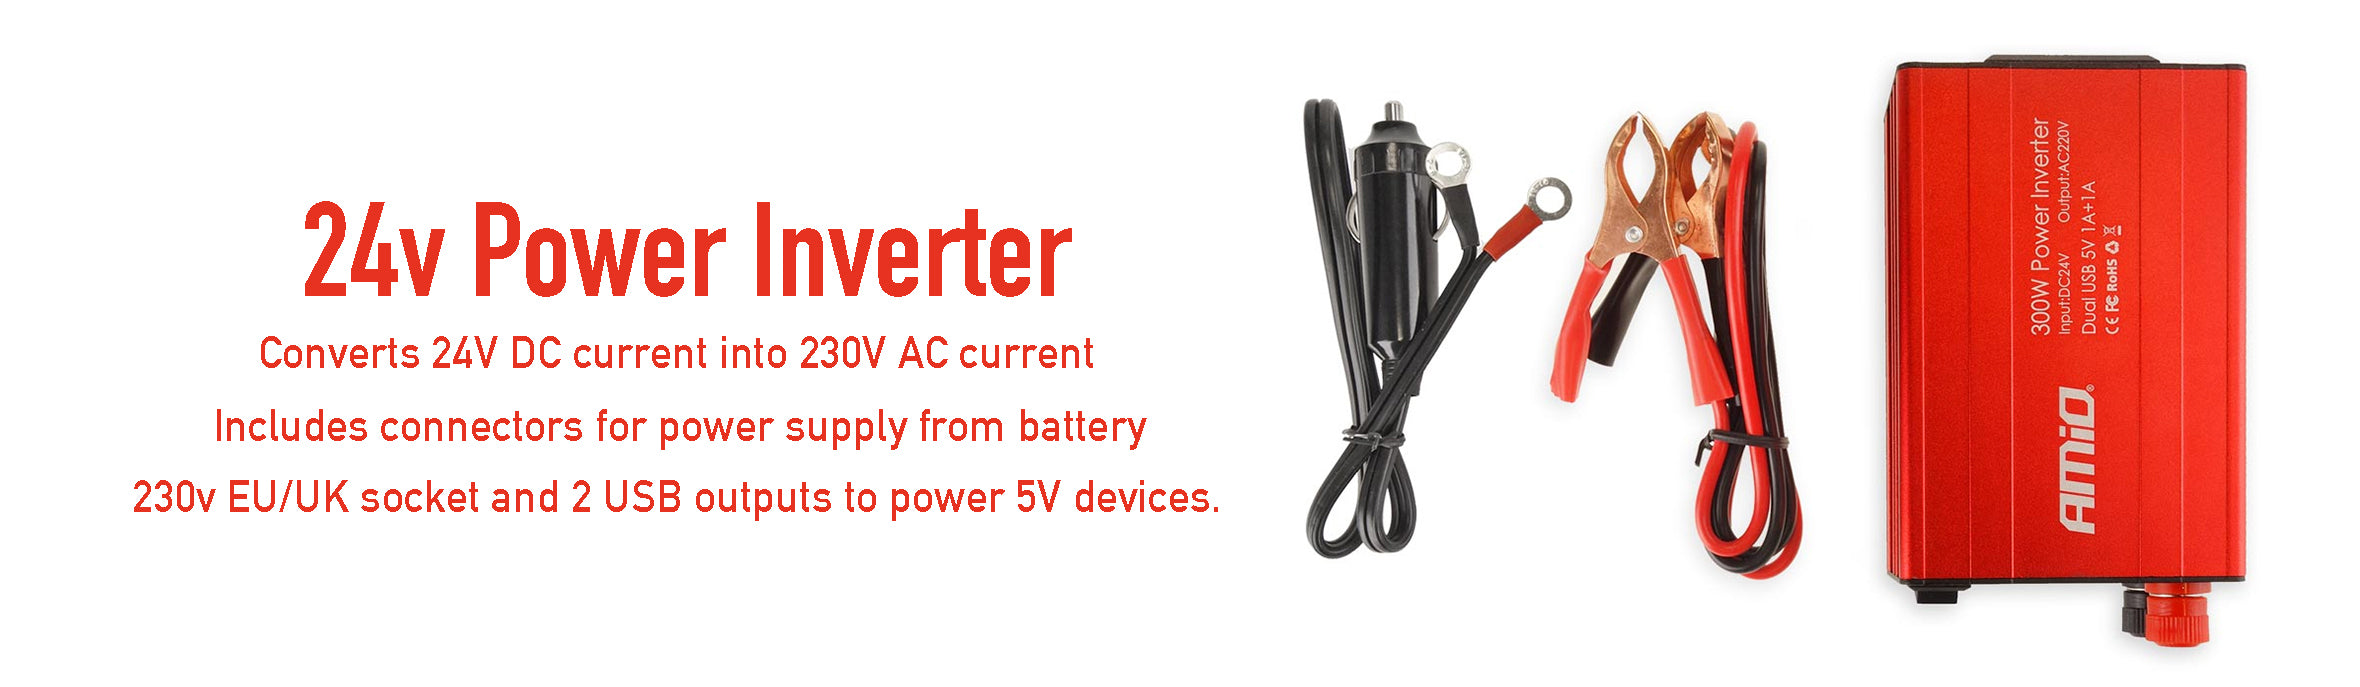 24v power inverter for trucks with uk plug and usb ports